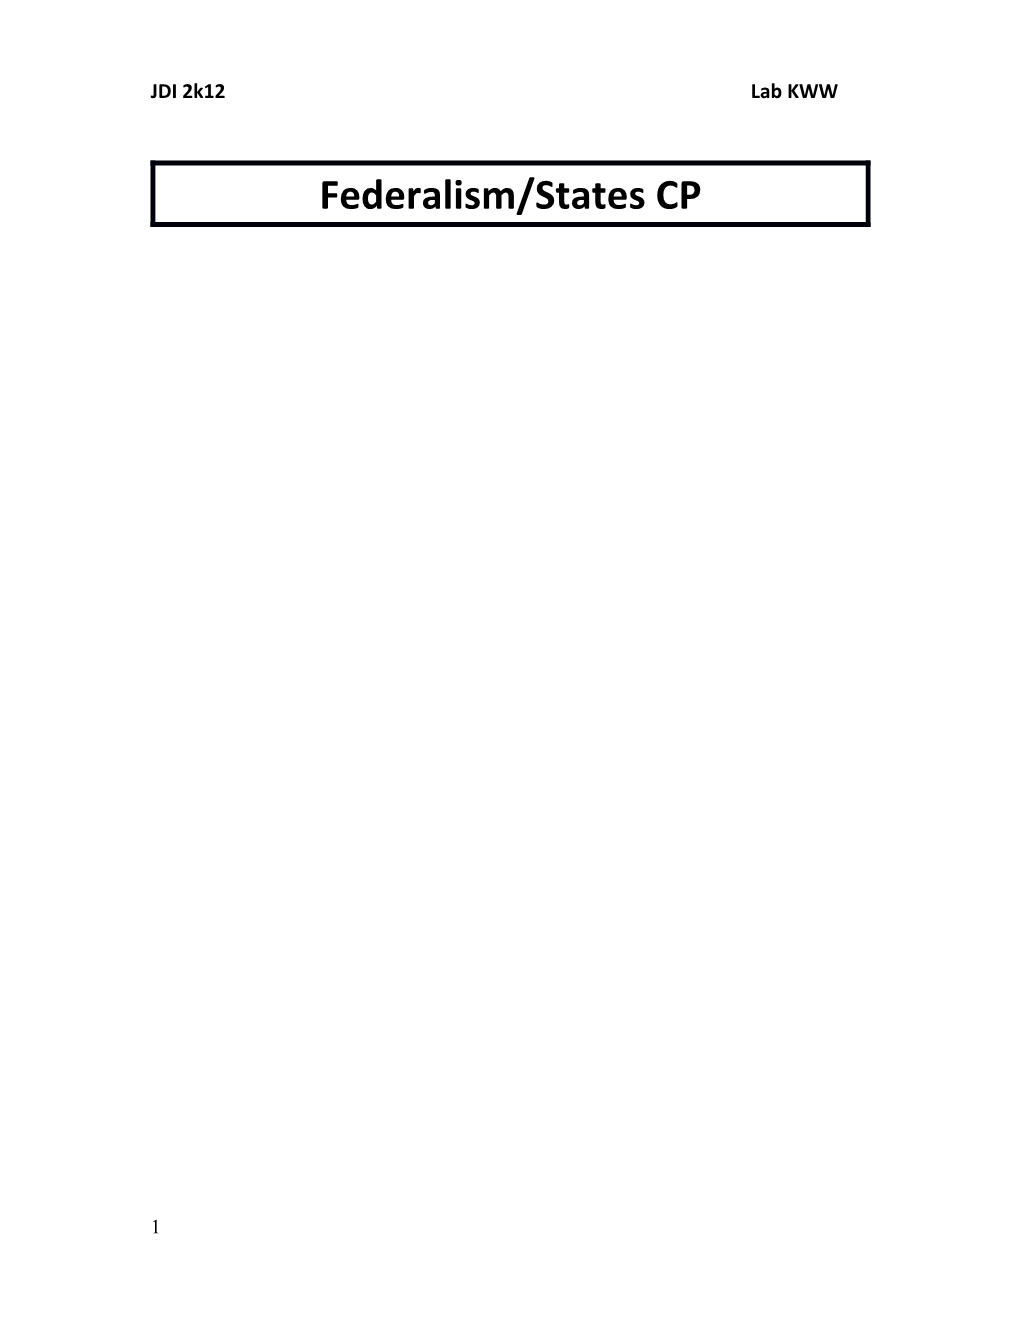 Federalism/States CP